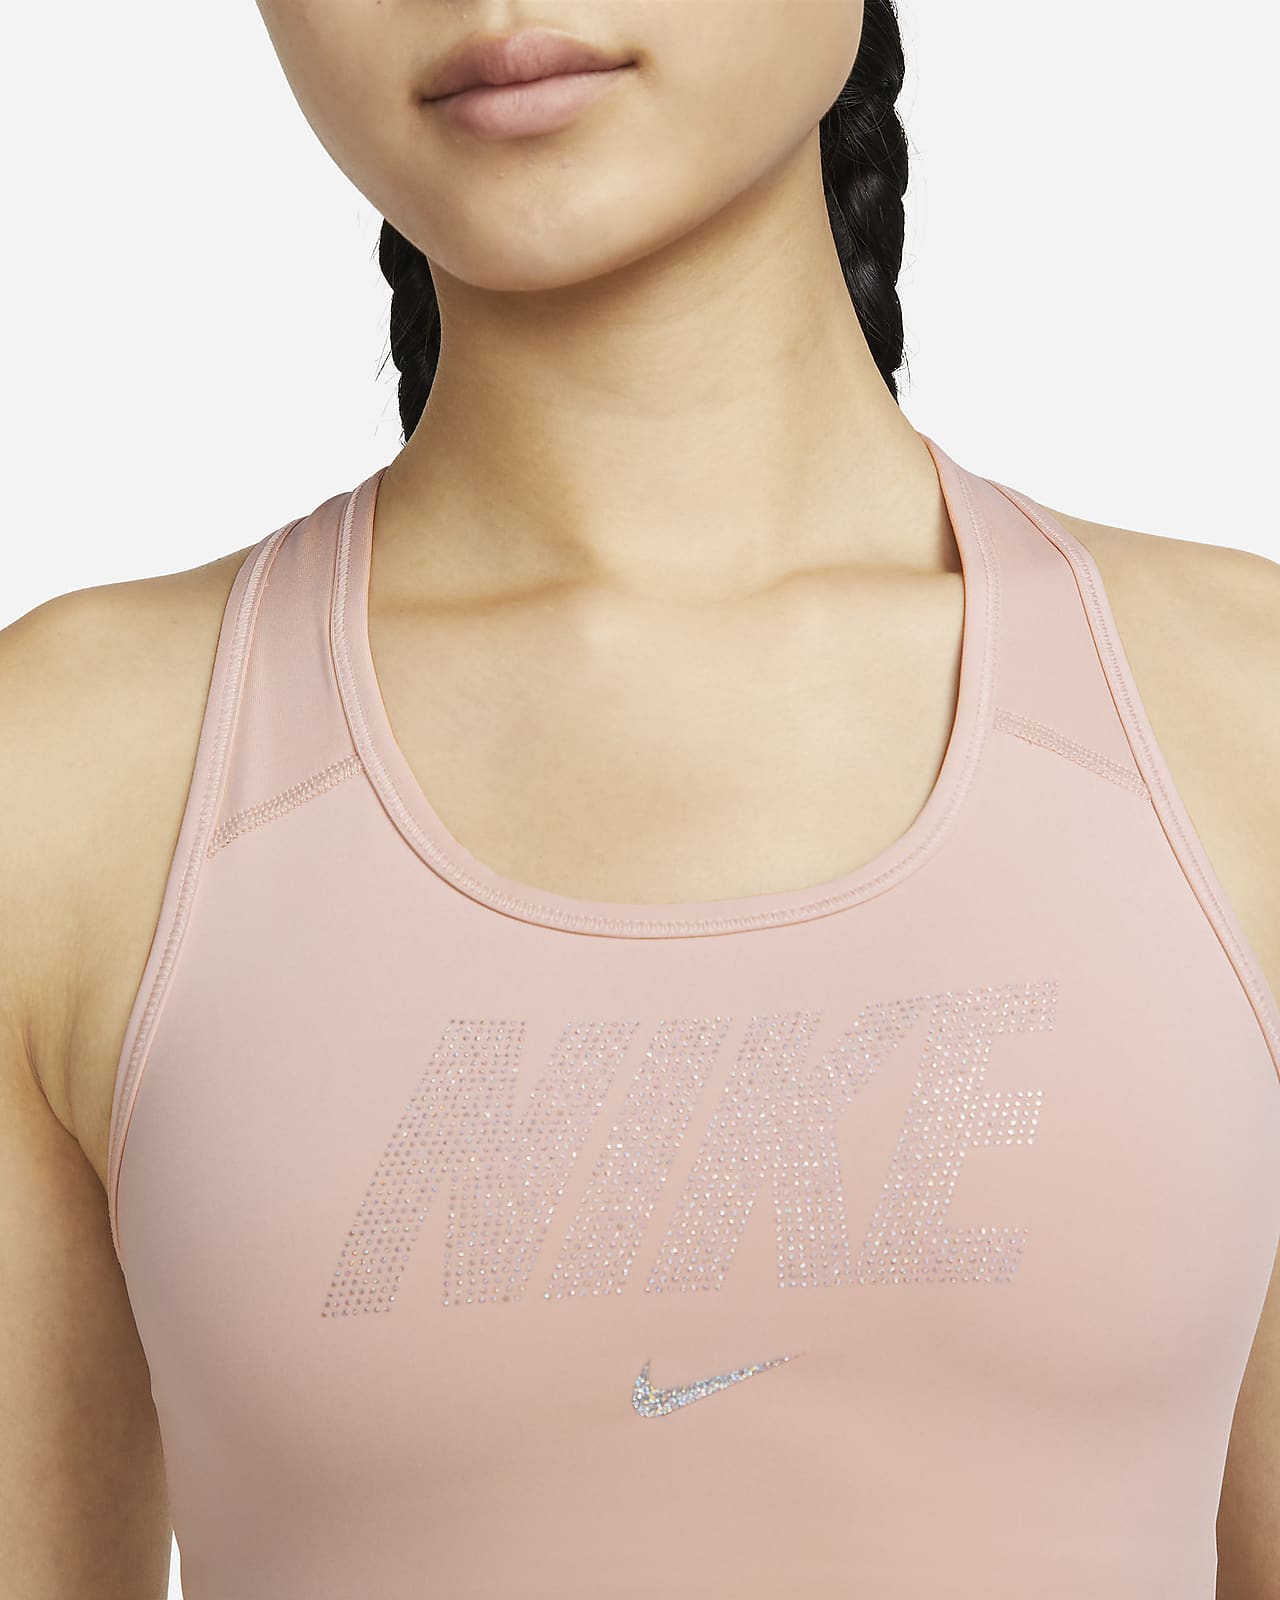 Nike Classic Swoosh Futura Modern Women's Medium Support Sports Gym Bra